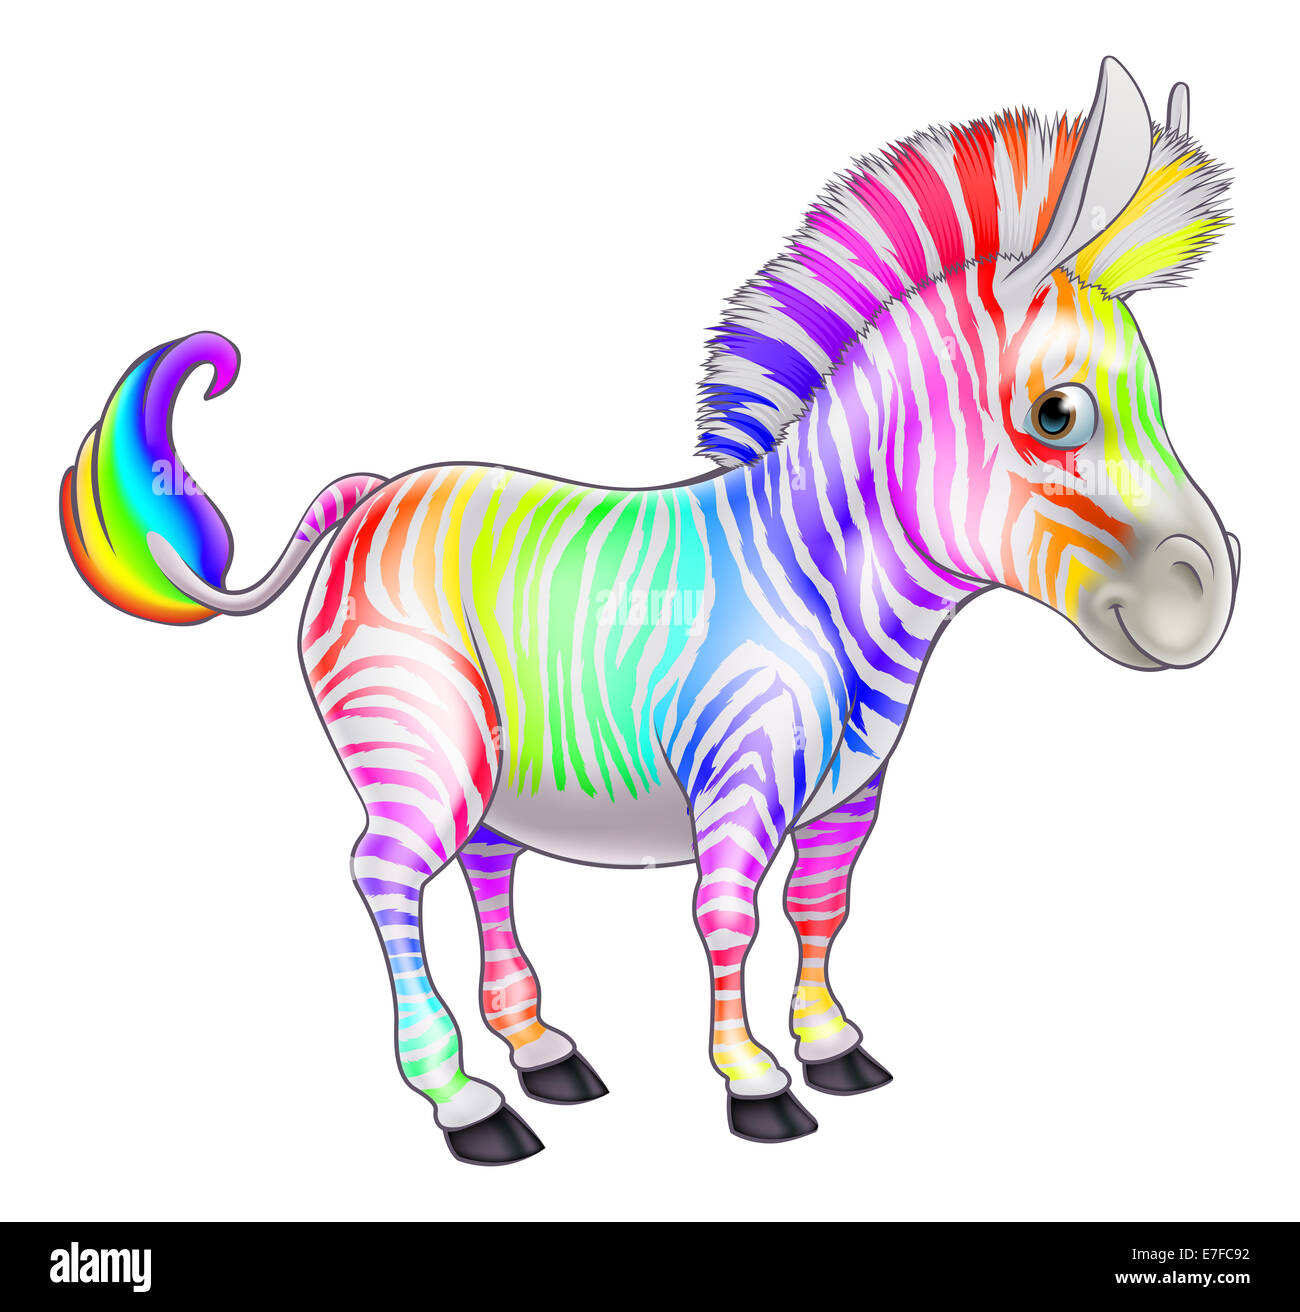 A cartoon cute multicolored rainbow zebra animal character Stock ...